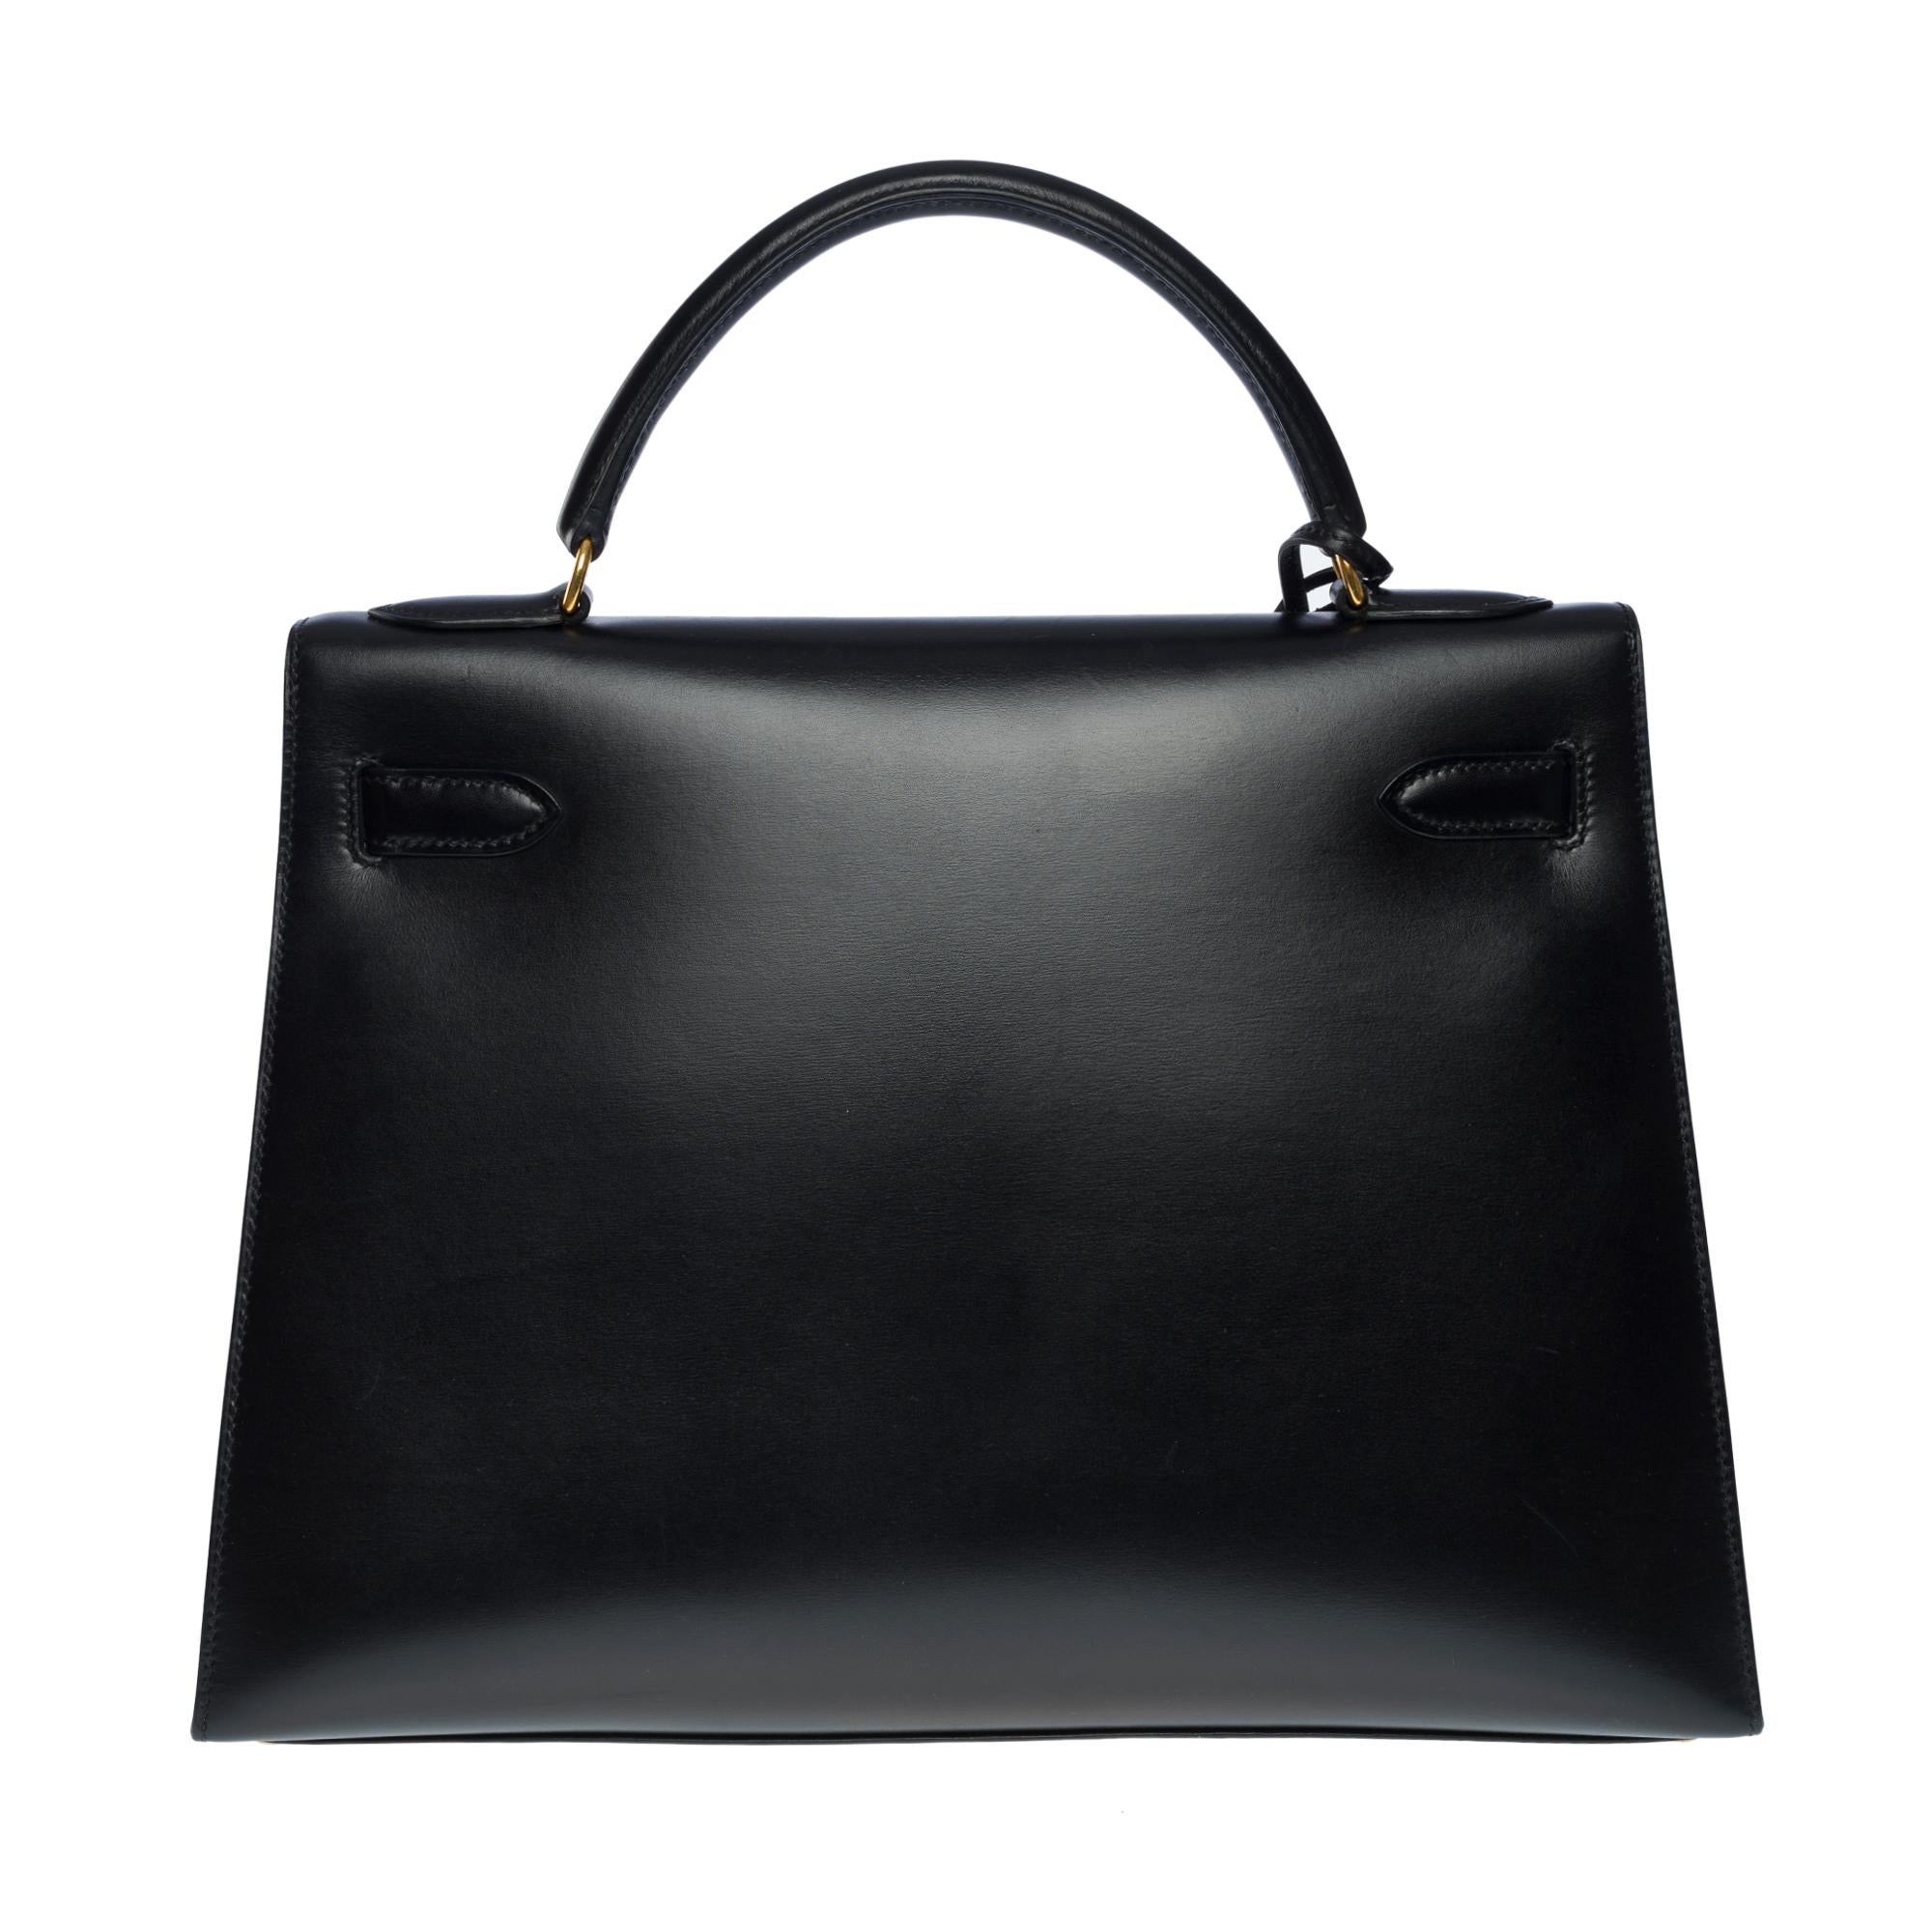 Black Gorgeous Hermès Kelly 32 sellier handbag strap in black box calf leather, GHW For Sale